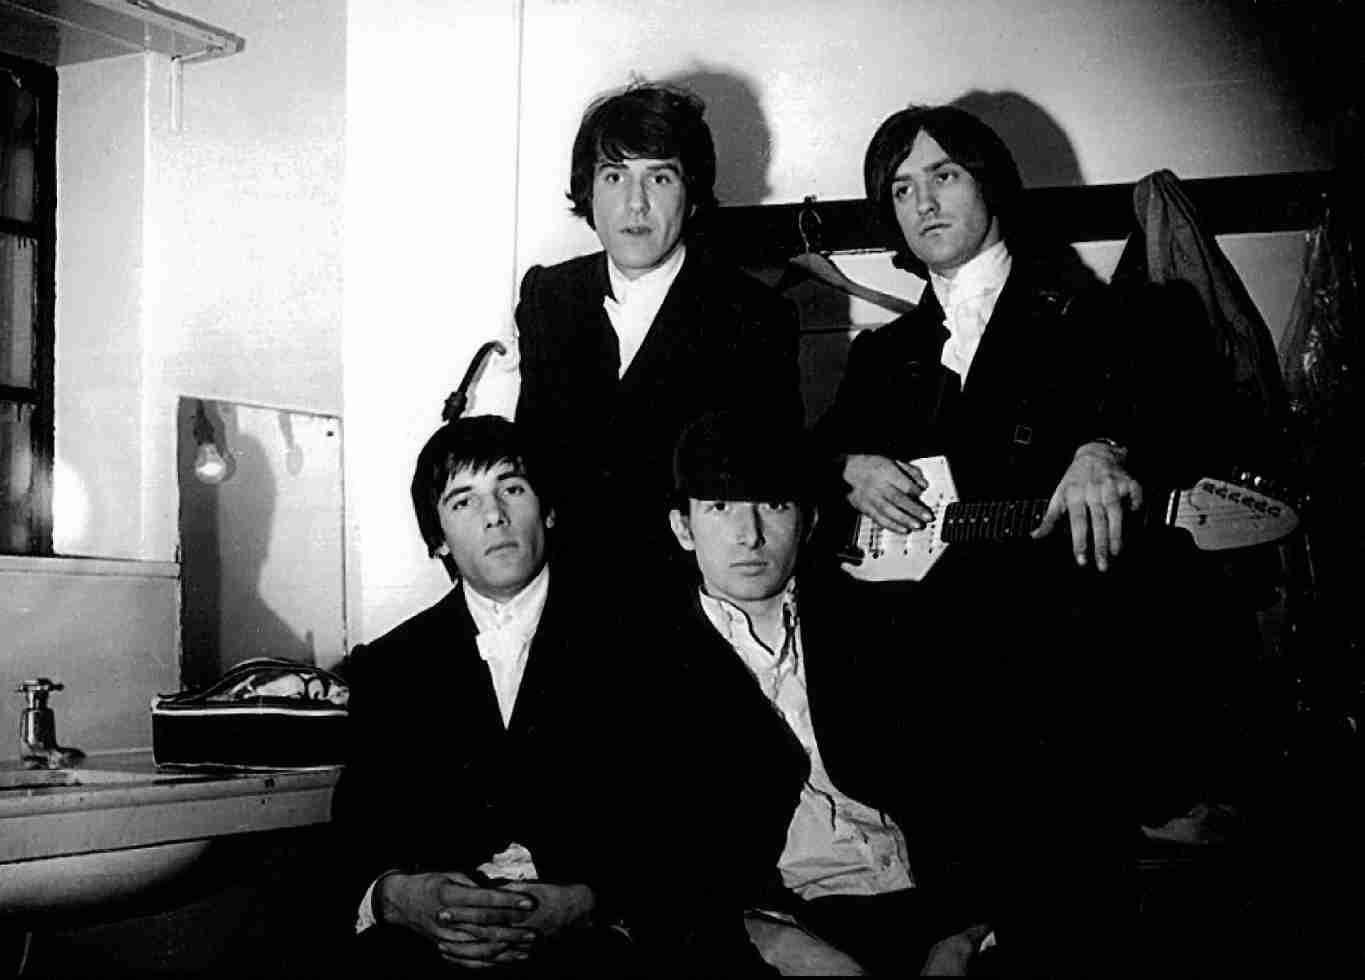 Ian Wright Black and White Photograph - The Kinks, Stockton on Tees, England 1964